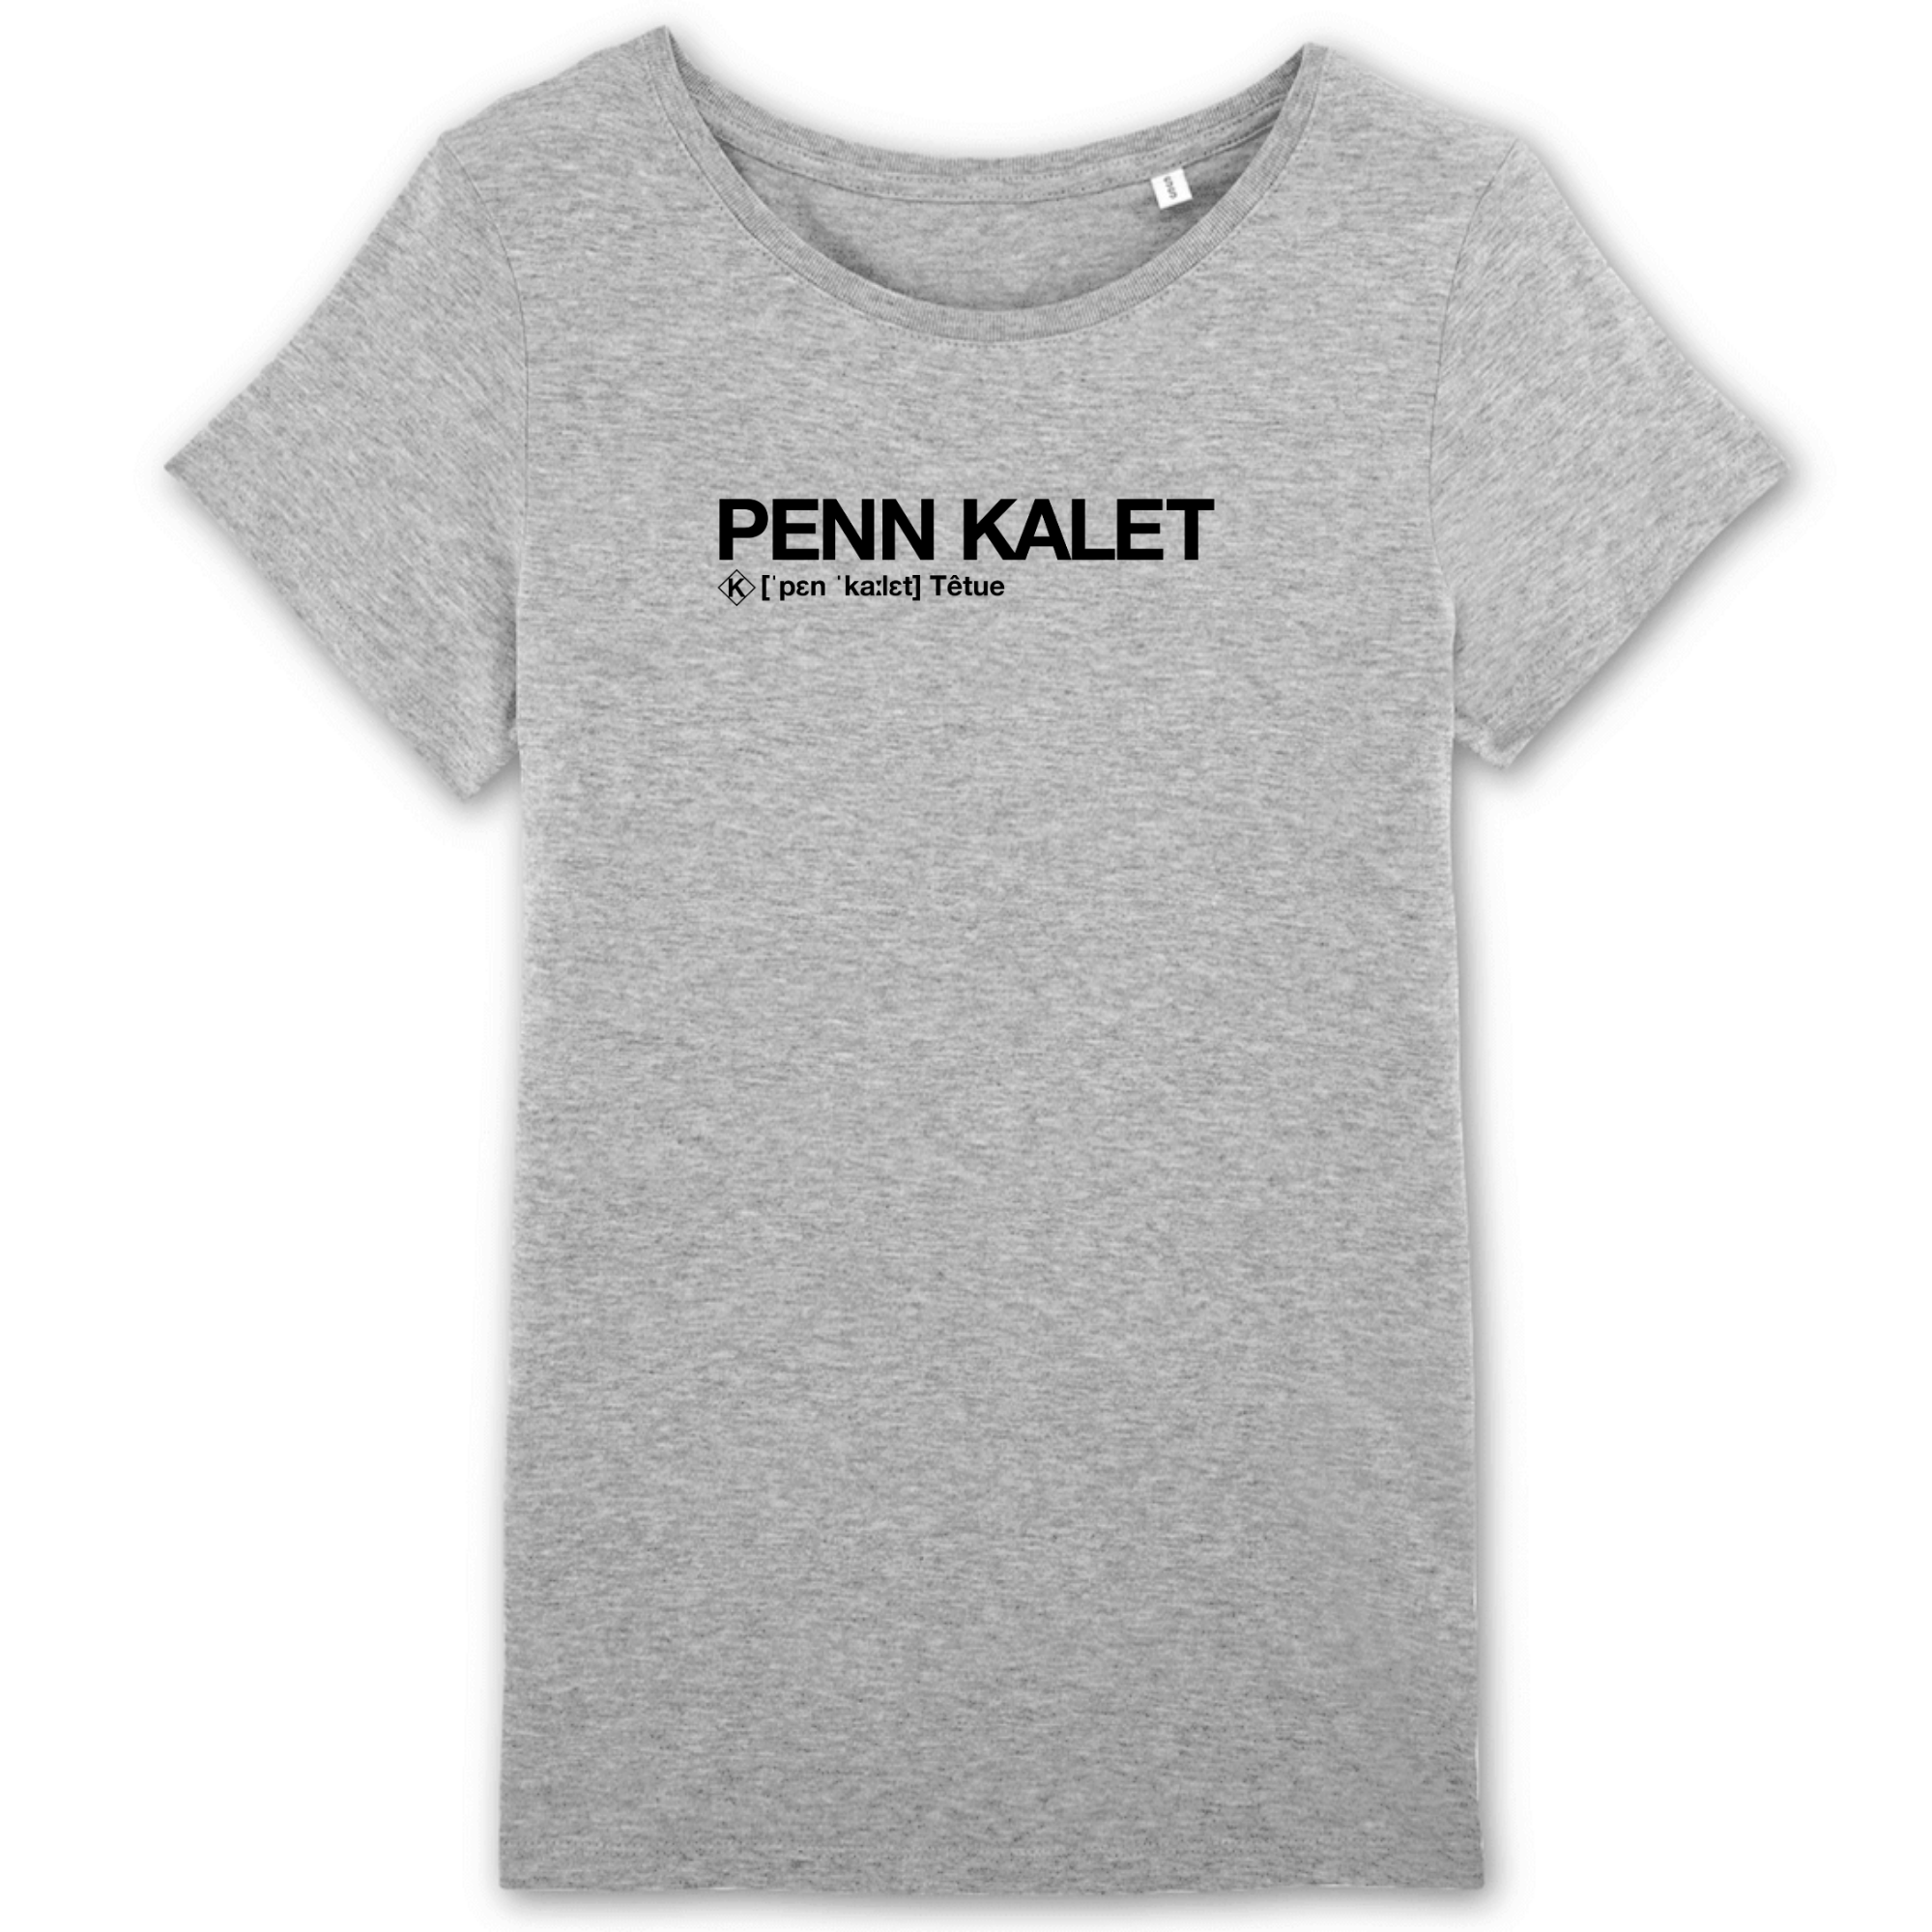 Penn Kalet T-shirt (Têtue)